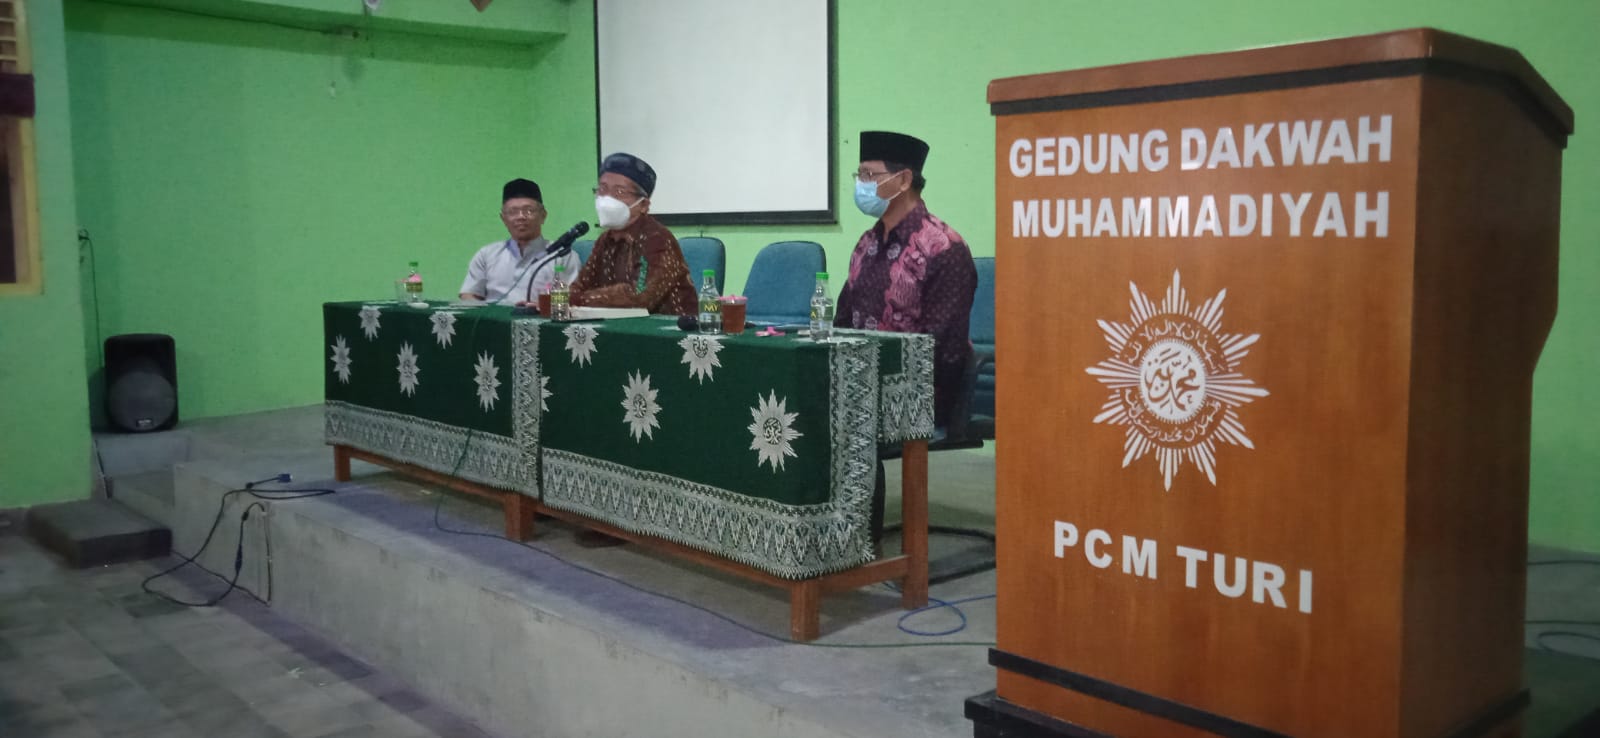 Susana Kajian di Gedung Dakwah Muhammadiyah PCM Turi